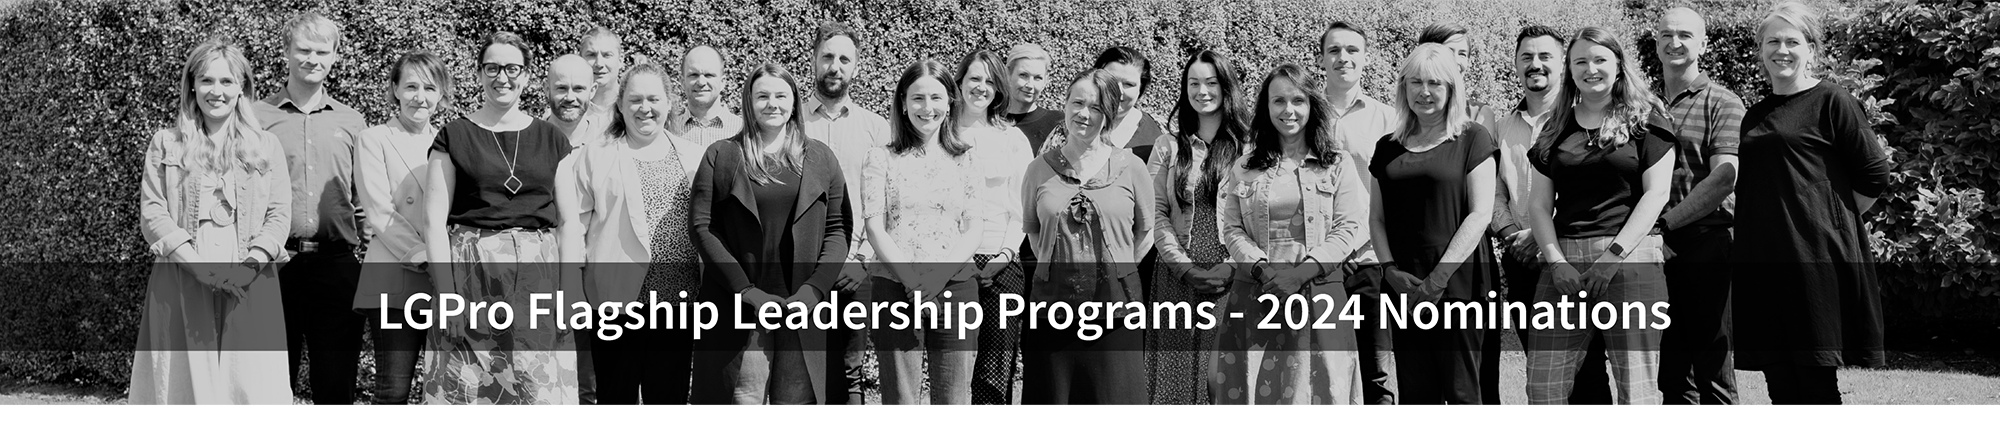 LGPro Flagship Leadership Program